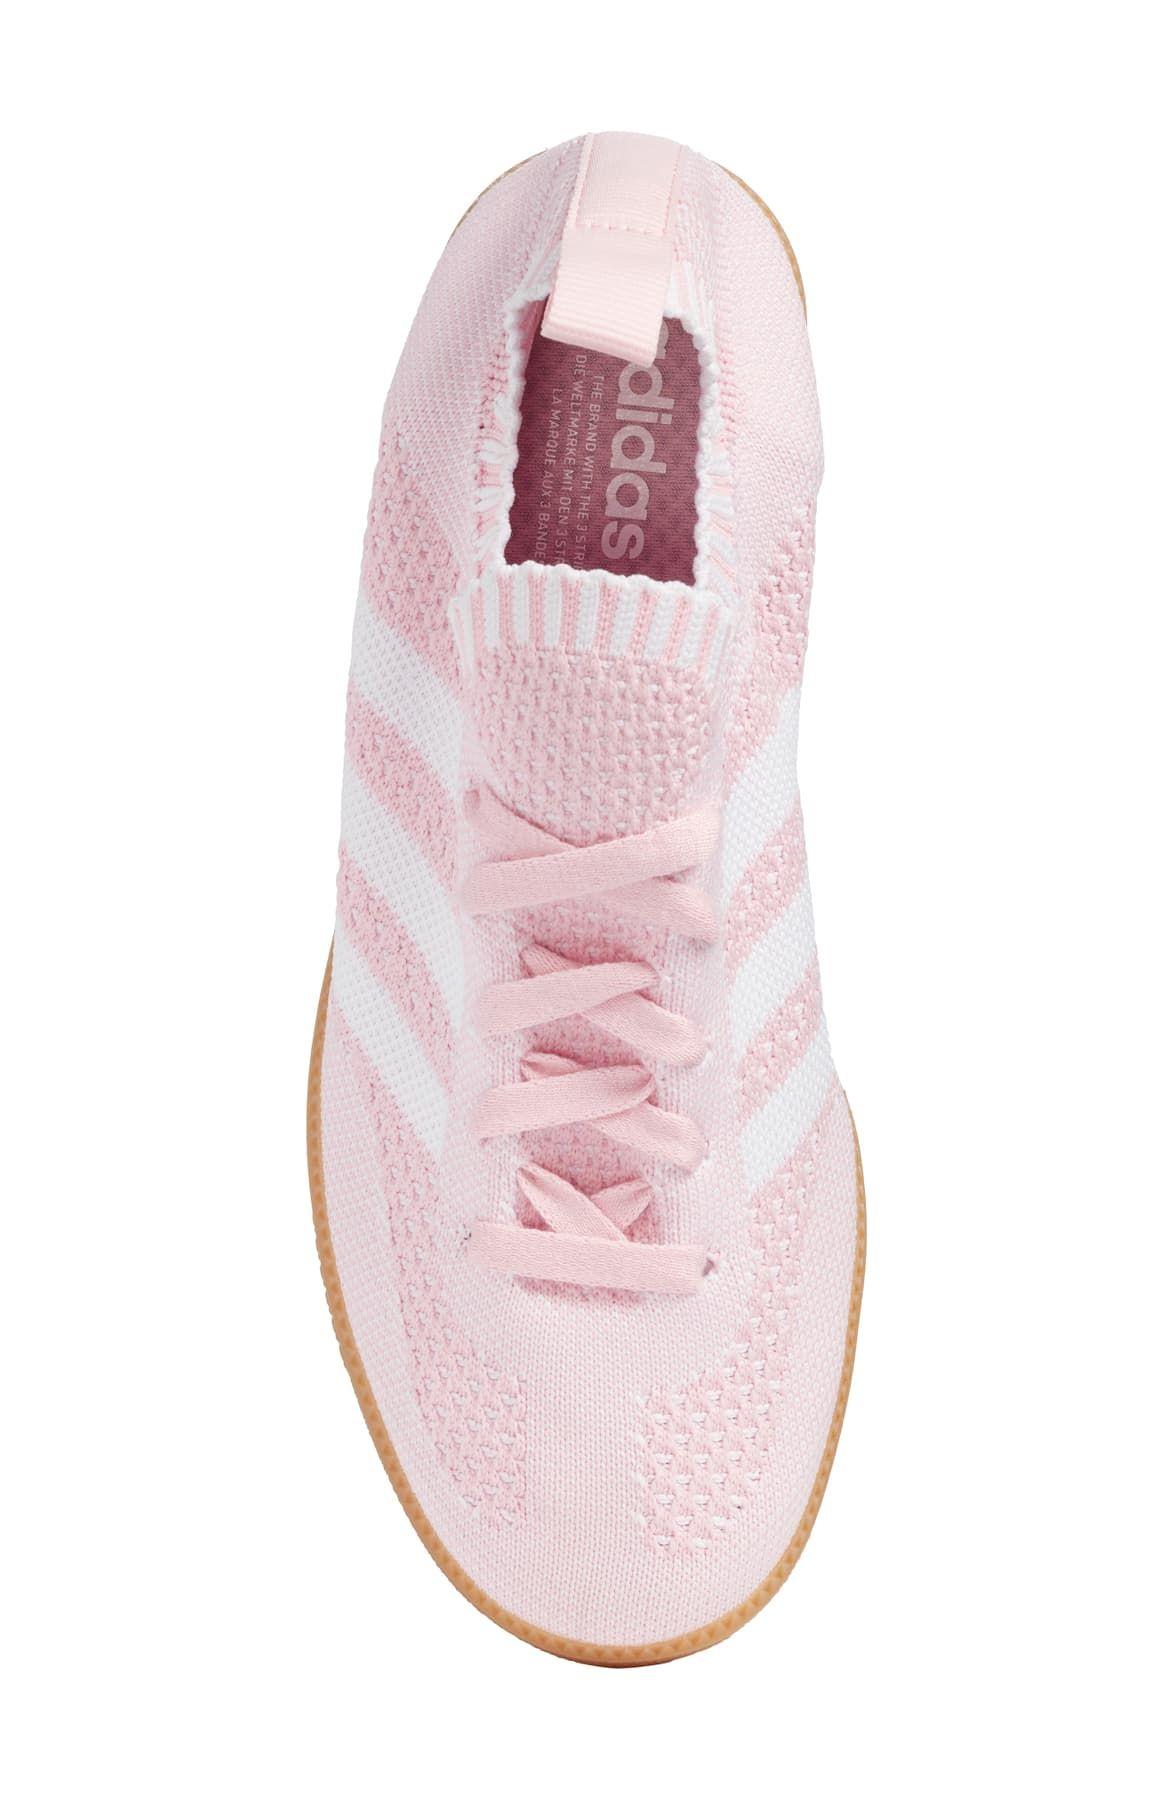 adidas Samba Primeknit Shoes in Pink | Lyst